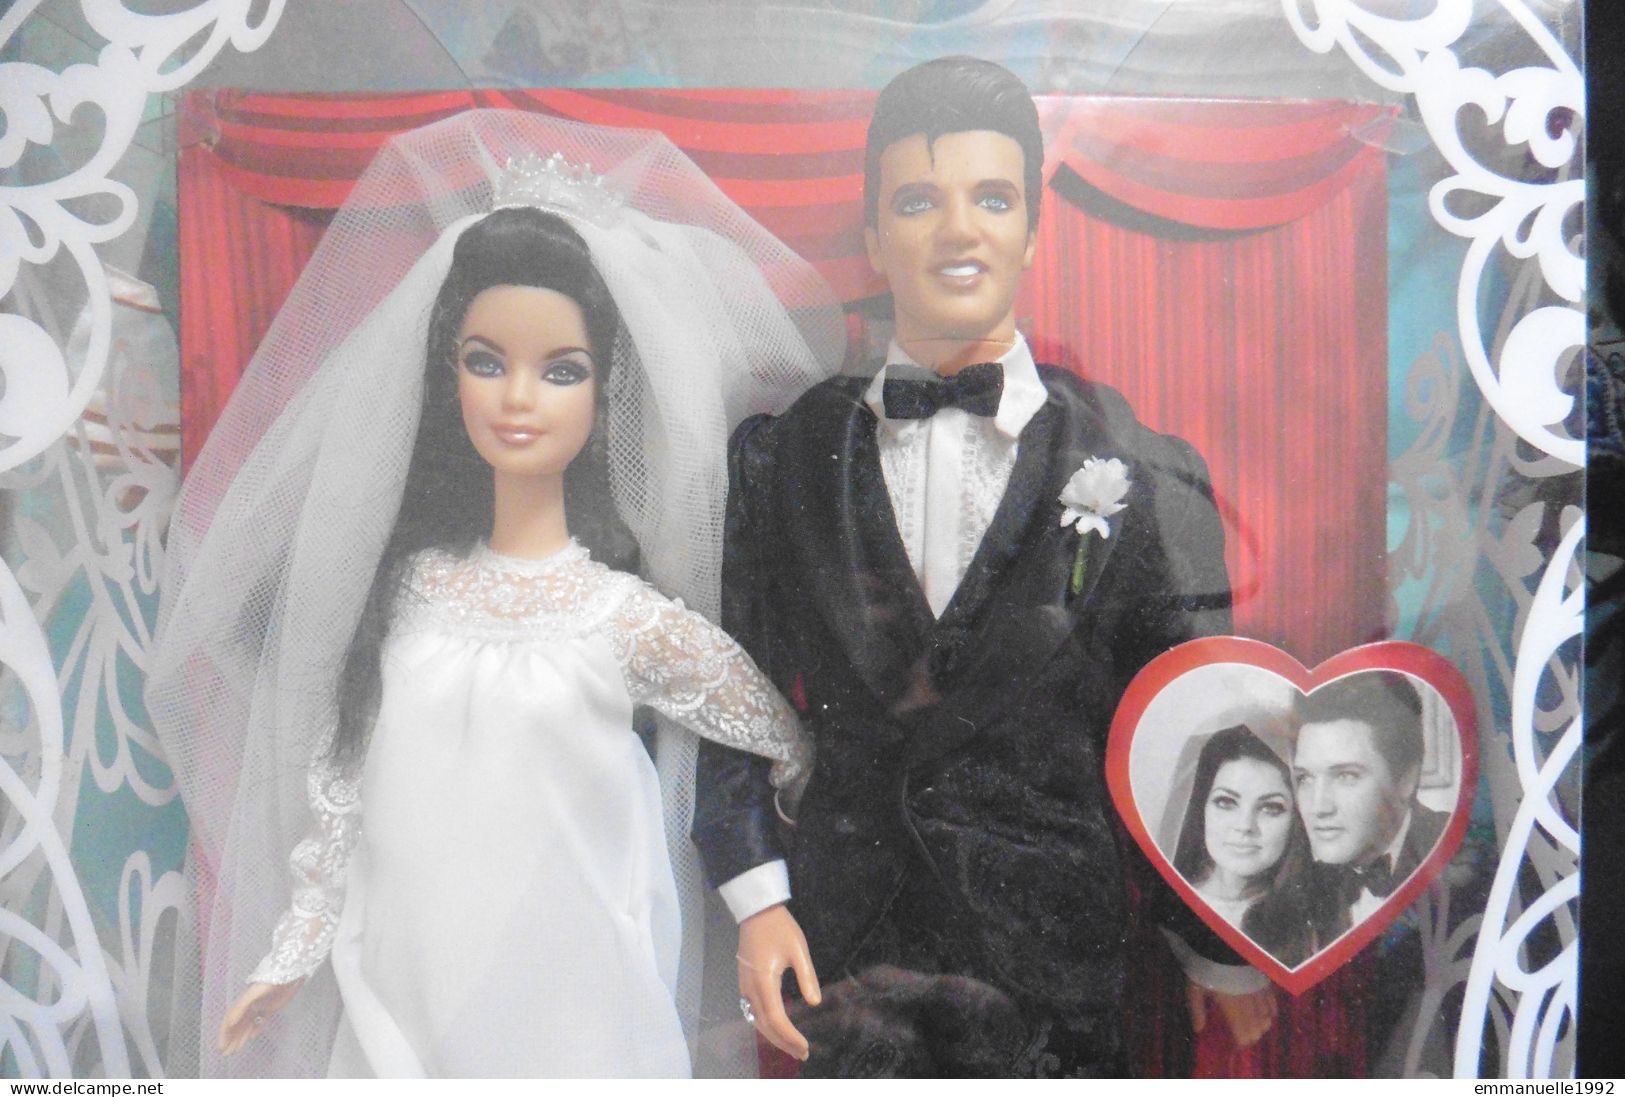 Barbie Mariage Elvis Presley And Priscilla Wedding At Las Vegas 1967 Mattel Collector 2008 Pink Label RARE !!! - Barbie